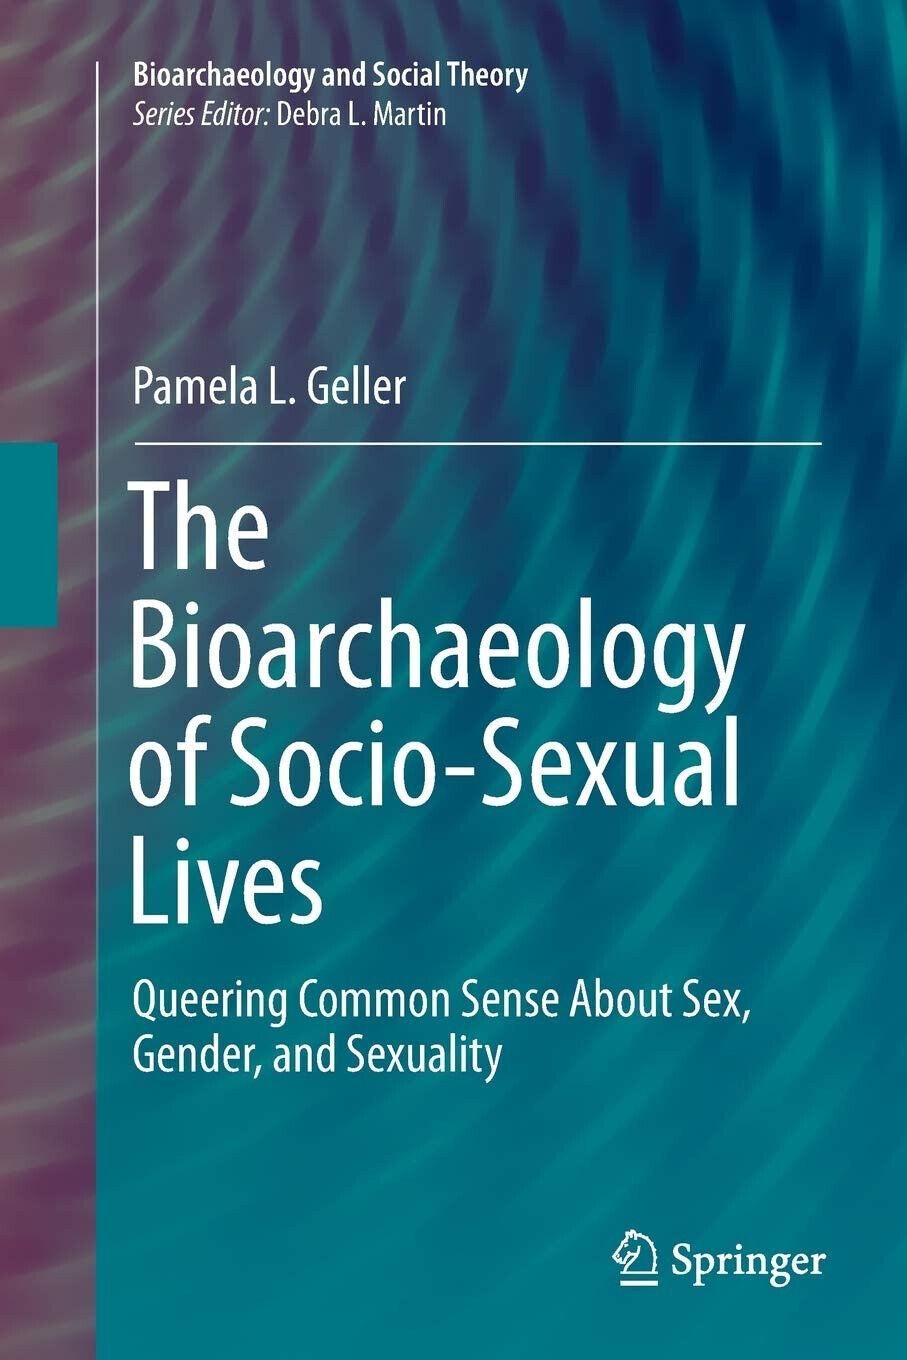 The Bioarchaeology of Socio-Sexual Lives - Pamela L. Geller - Springer, 2018